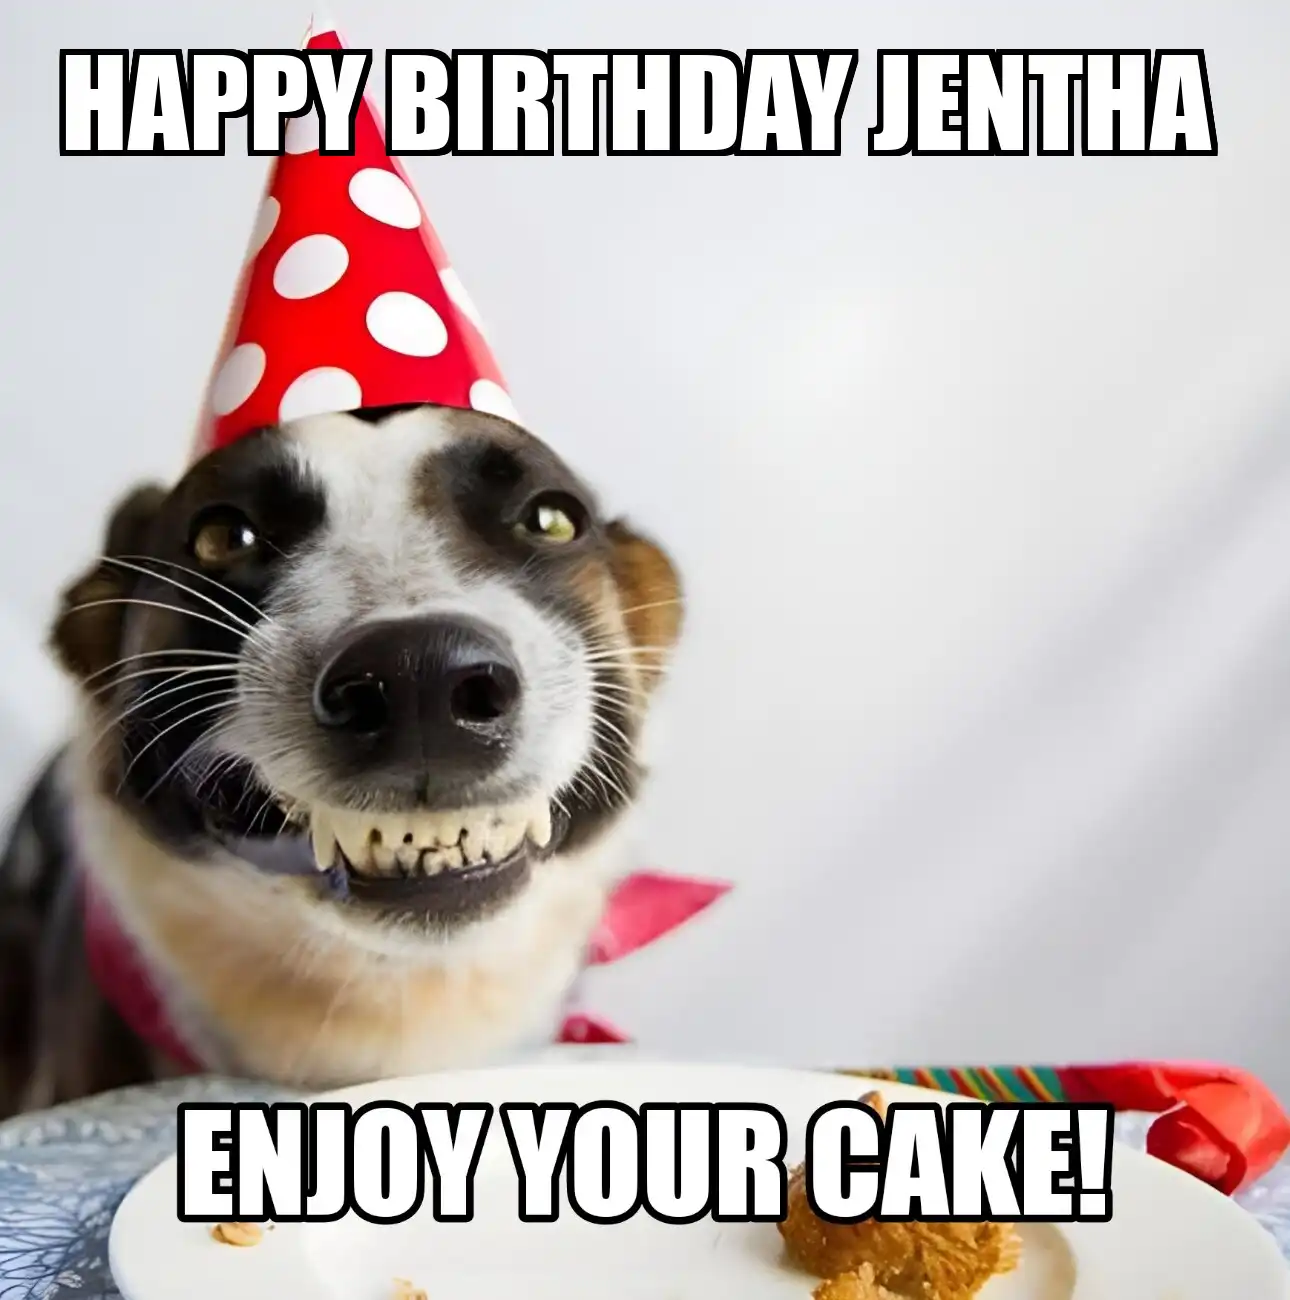 Happy Birthday Jentha Enjoy Your Cake Dog Meme